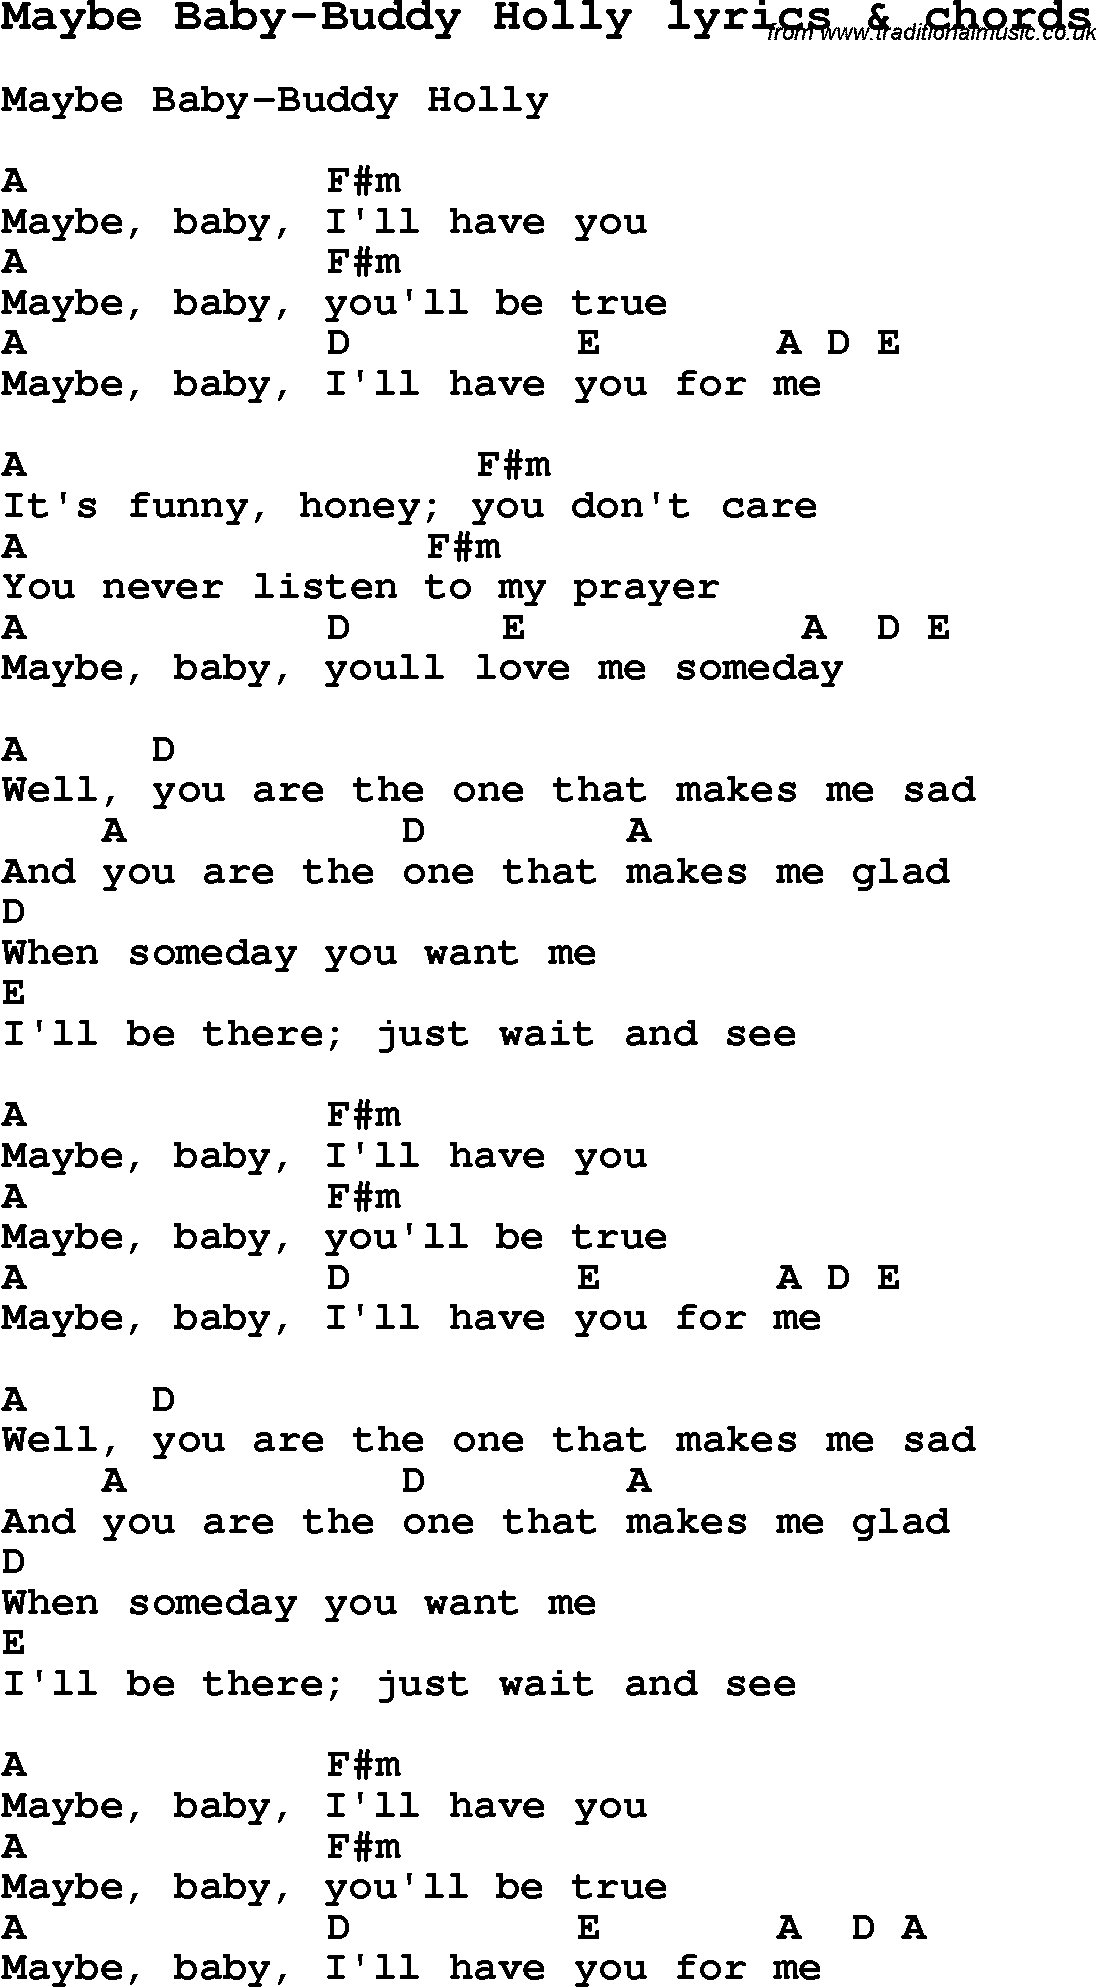 Love Song Lyrics for: Maybe Baby-Buddy Holly with chords for Ukulele, Guitar Banjo etc.